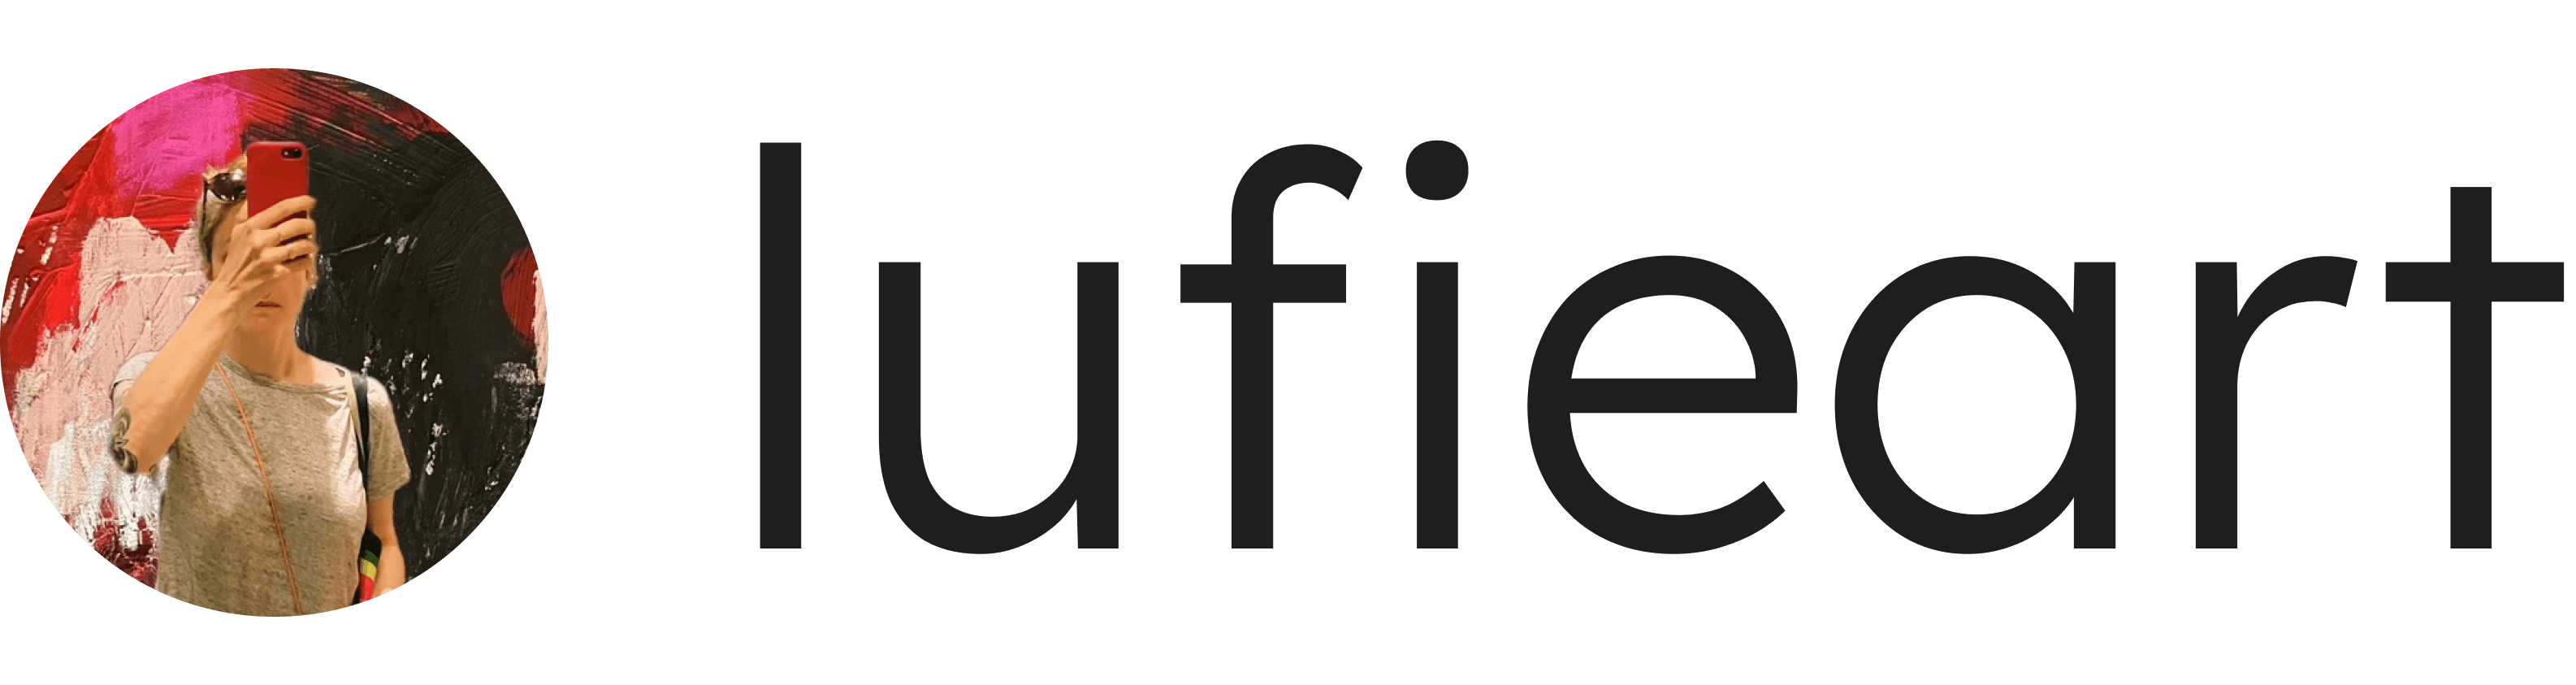 Lufie Art - logo